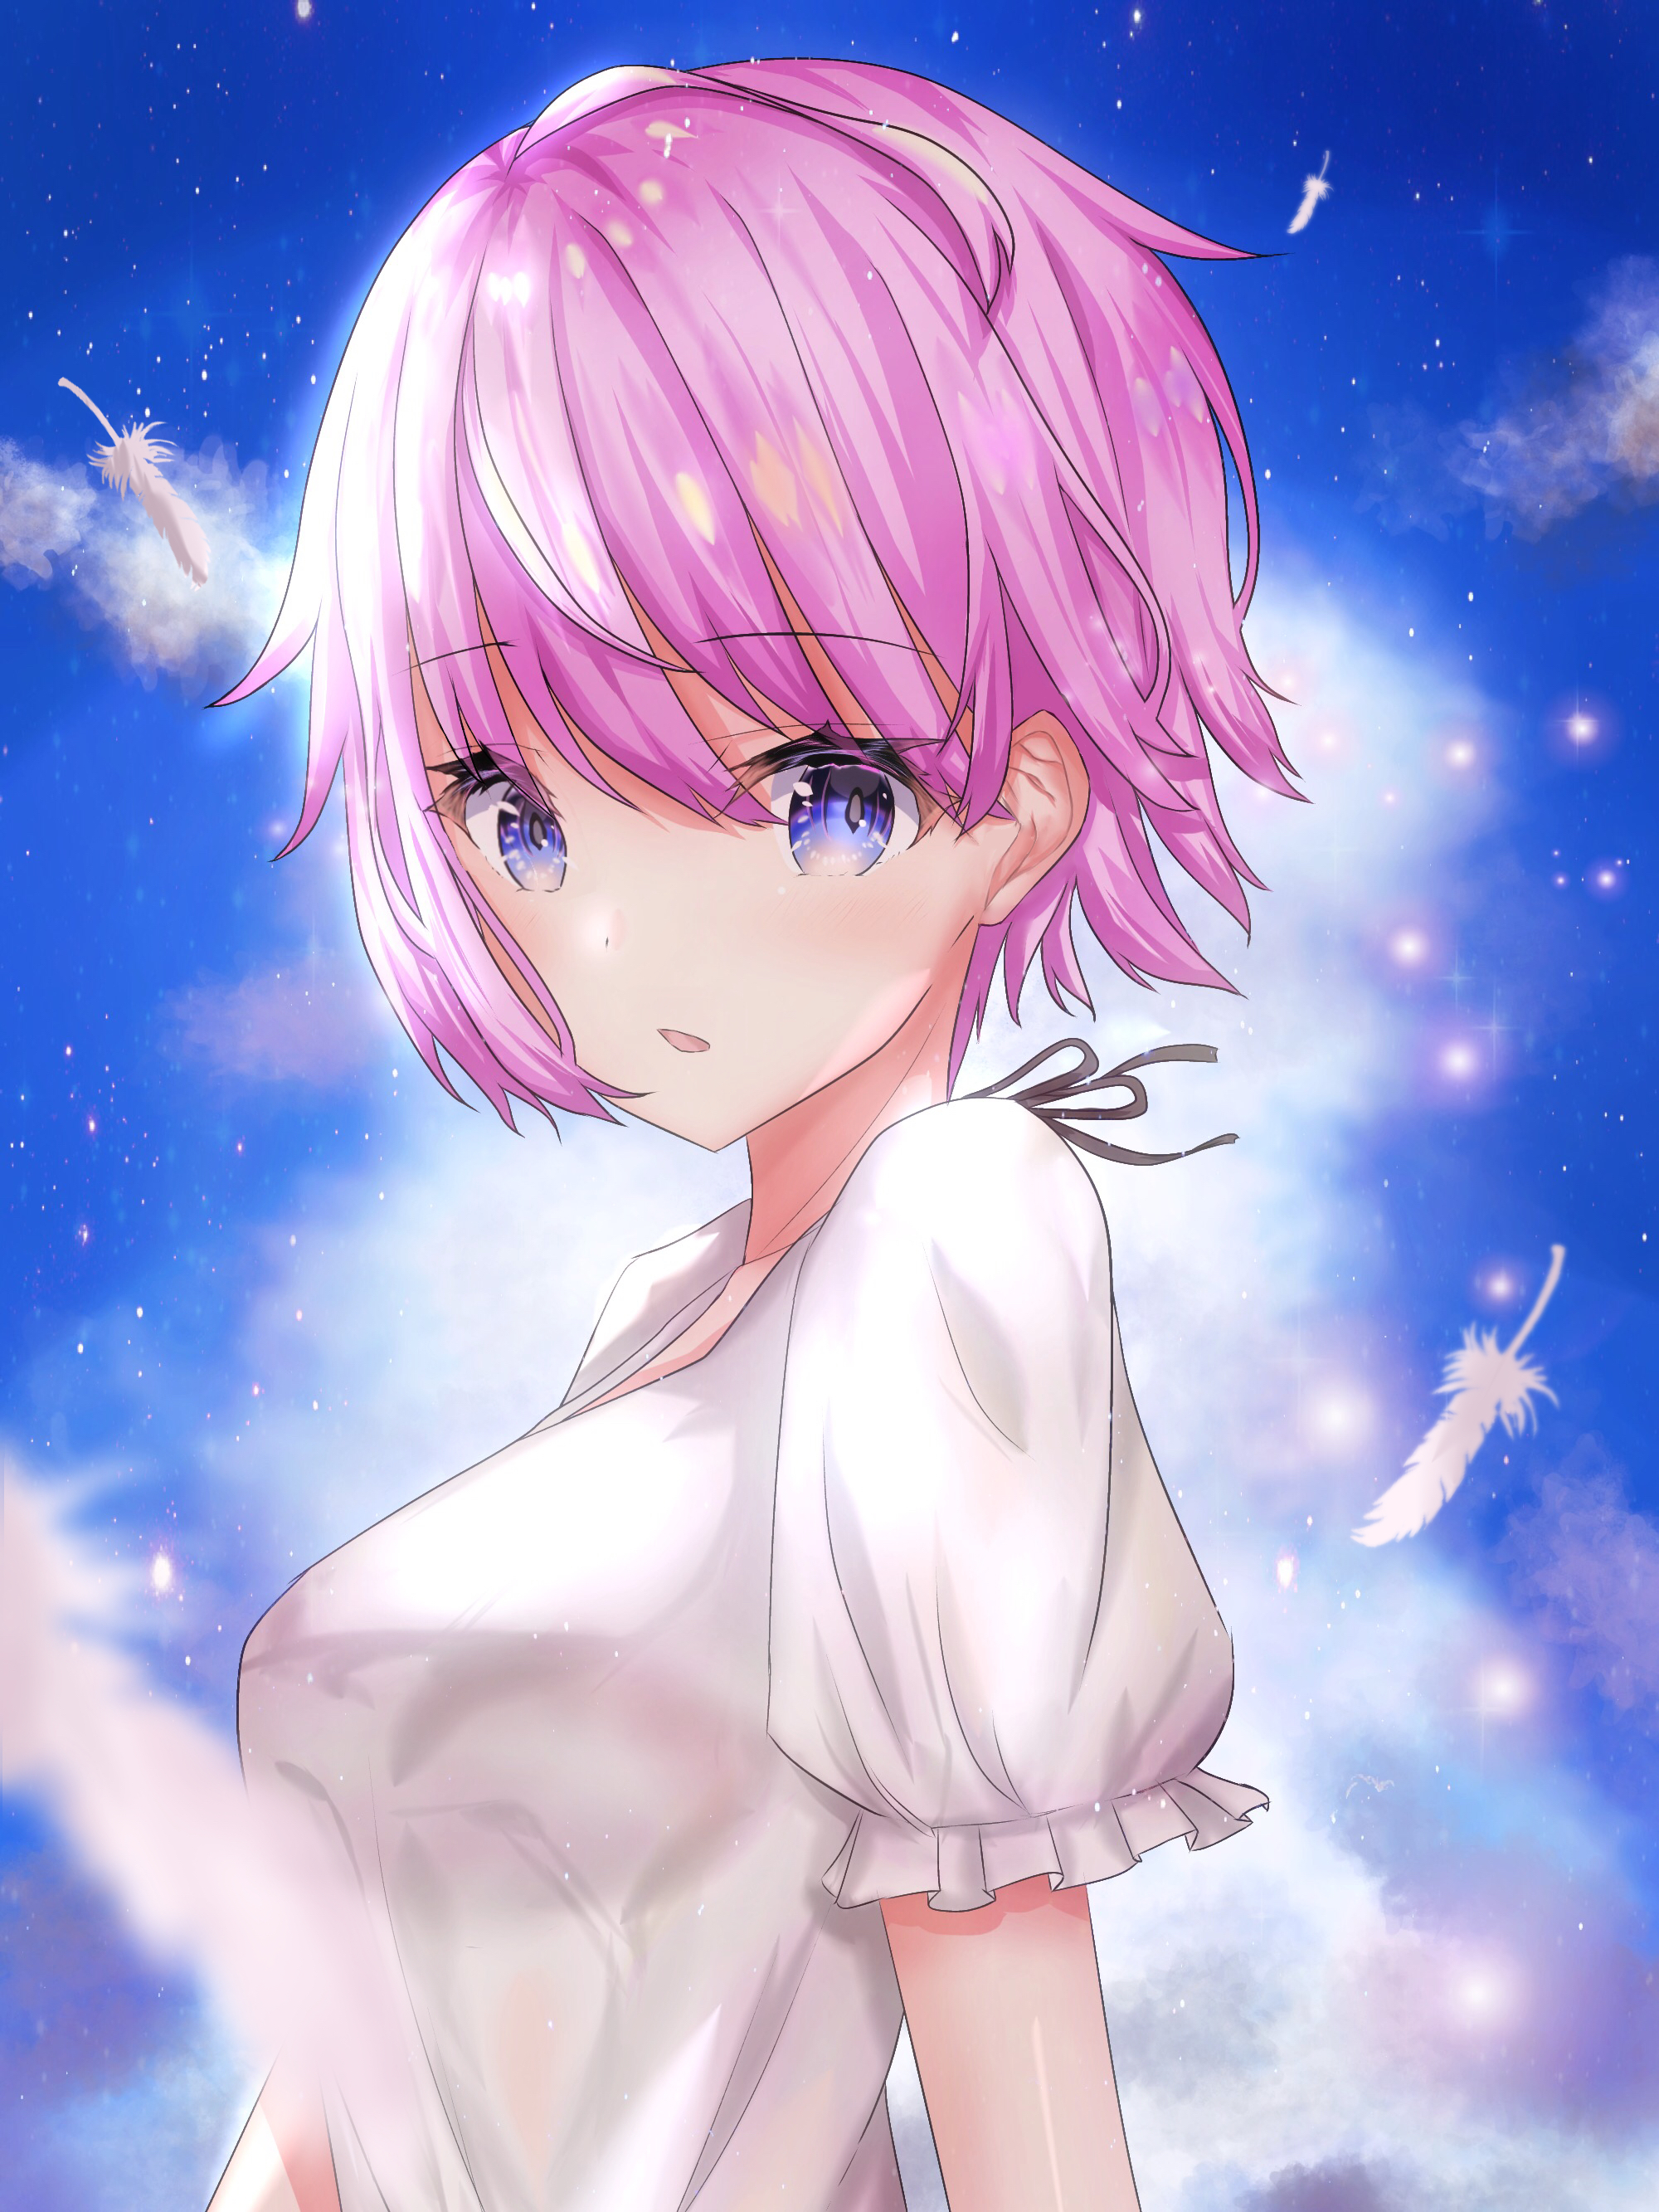 Anime Anime Girls 5 Toubun No Hanayome Nakano Ichika Short Hair Pink Hair Solo Artwork Digital Art F 2000x2666